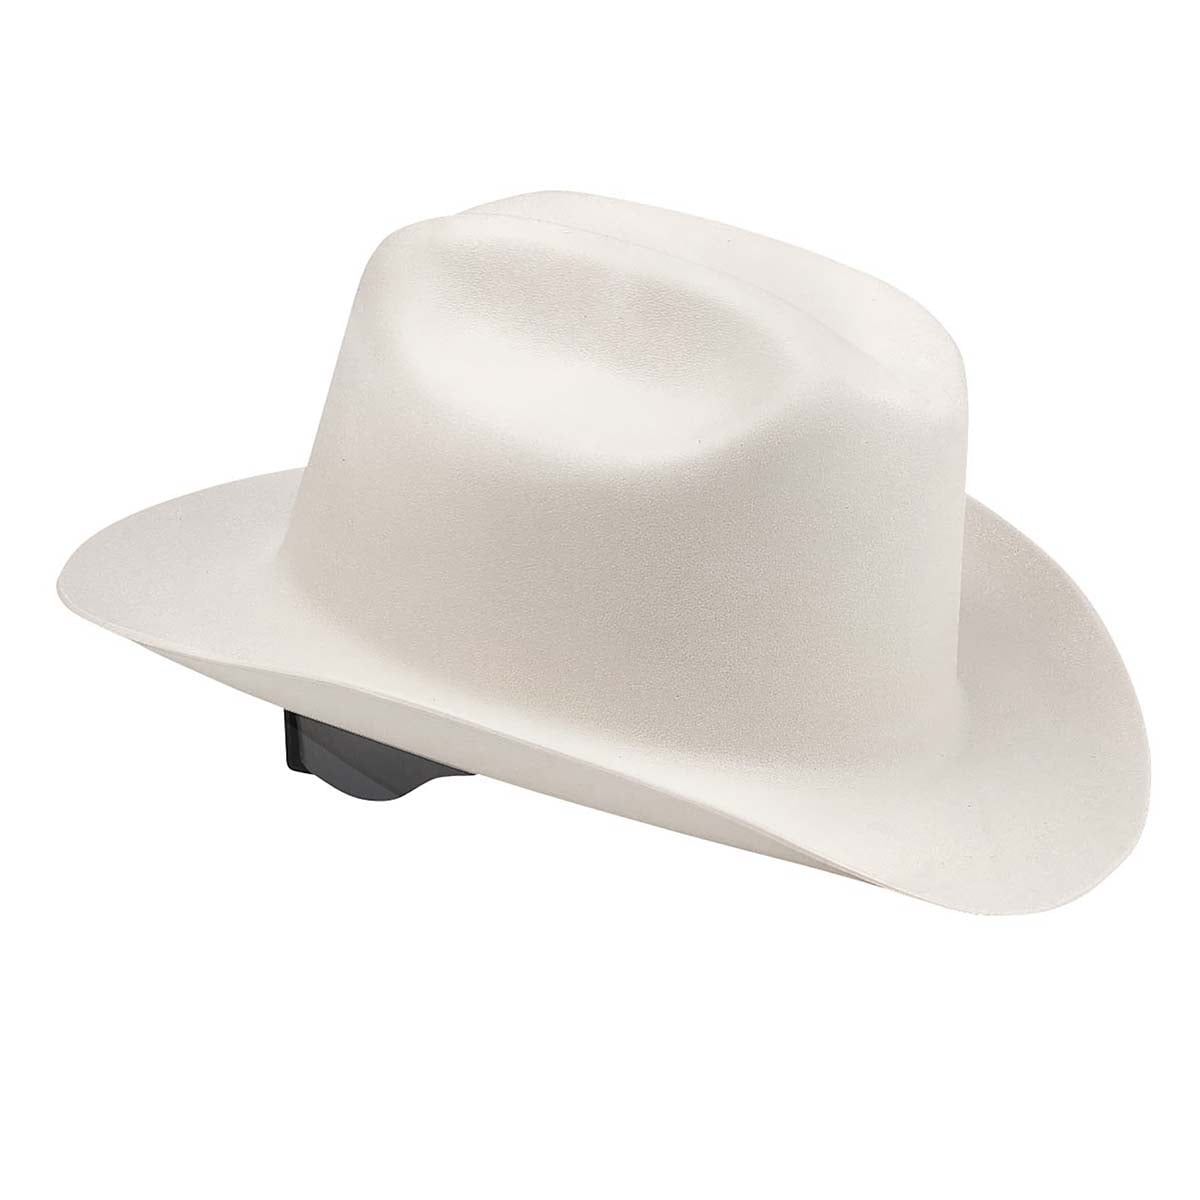 Jackson Western Cowboy Hard Hat with Ratchet Suspension - Orange, Medium